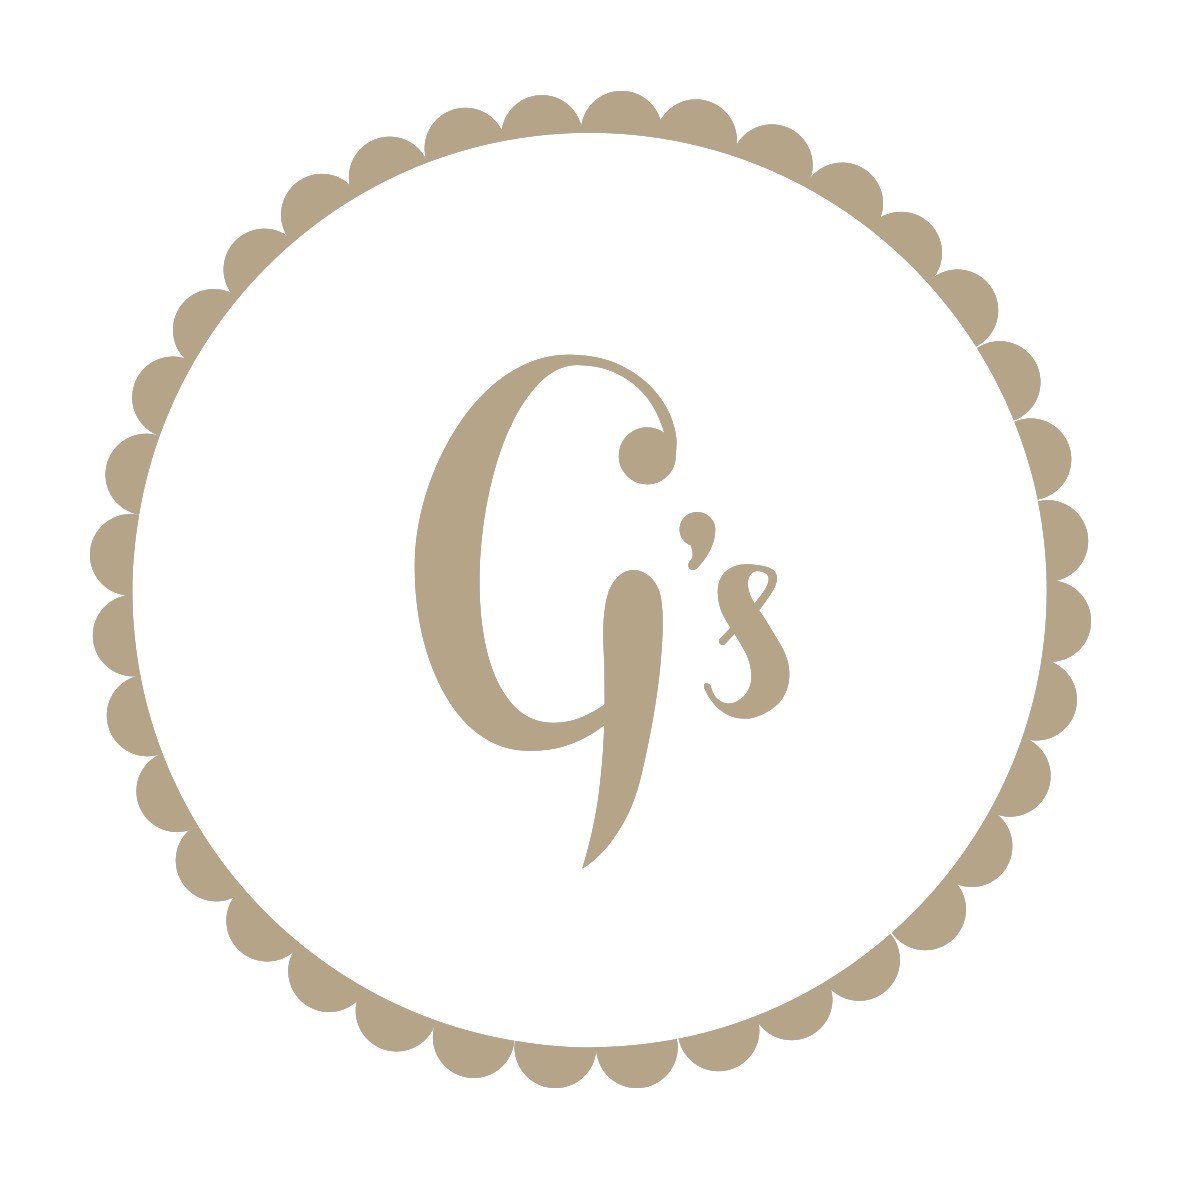 Gabriella's Olney | Italian Restaurant & Bakery